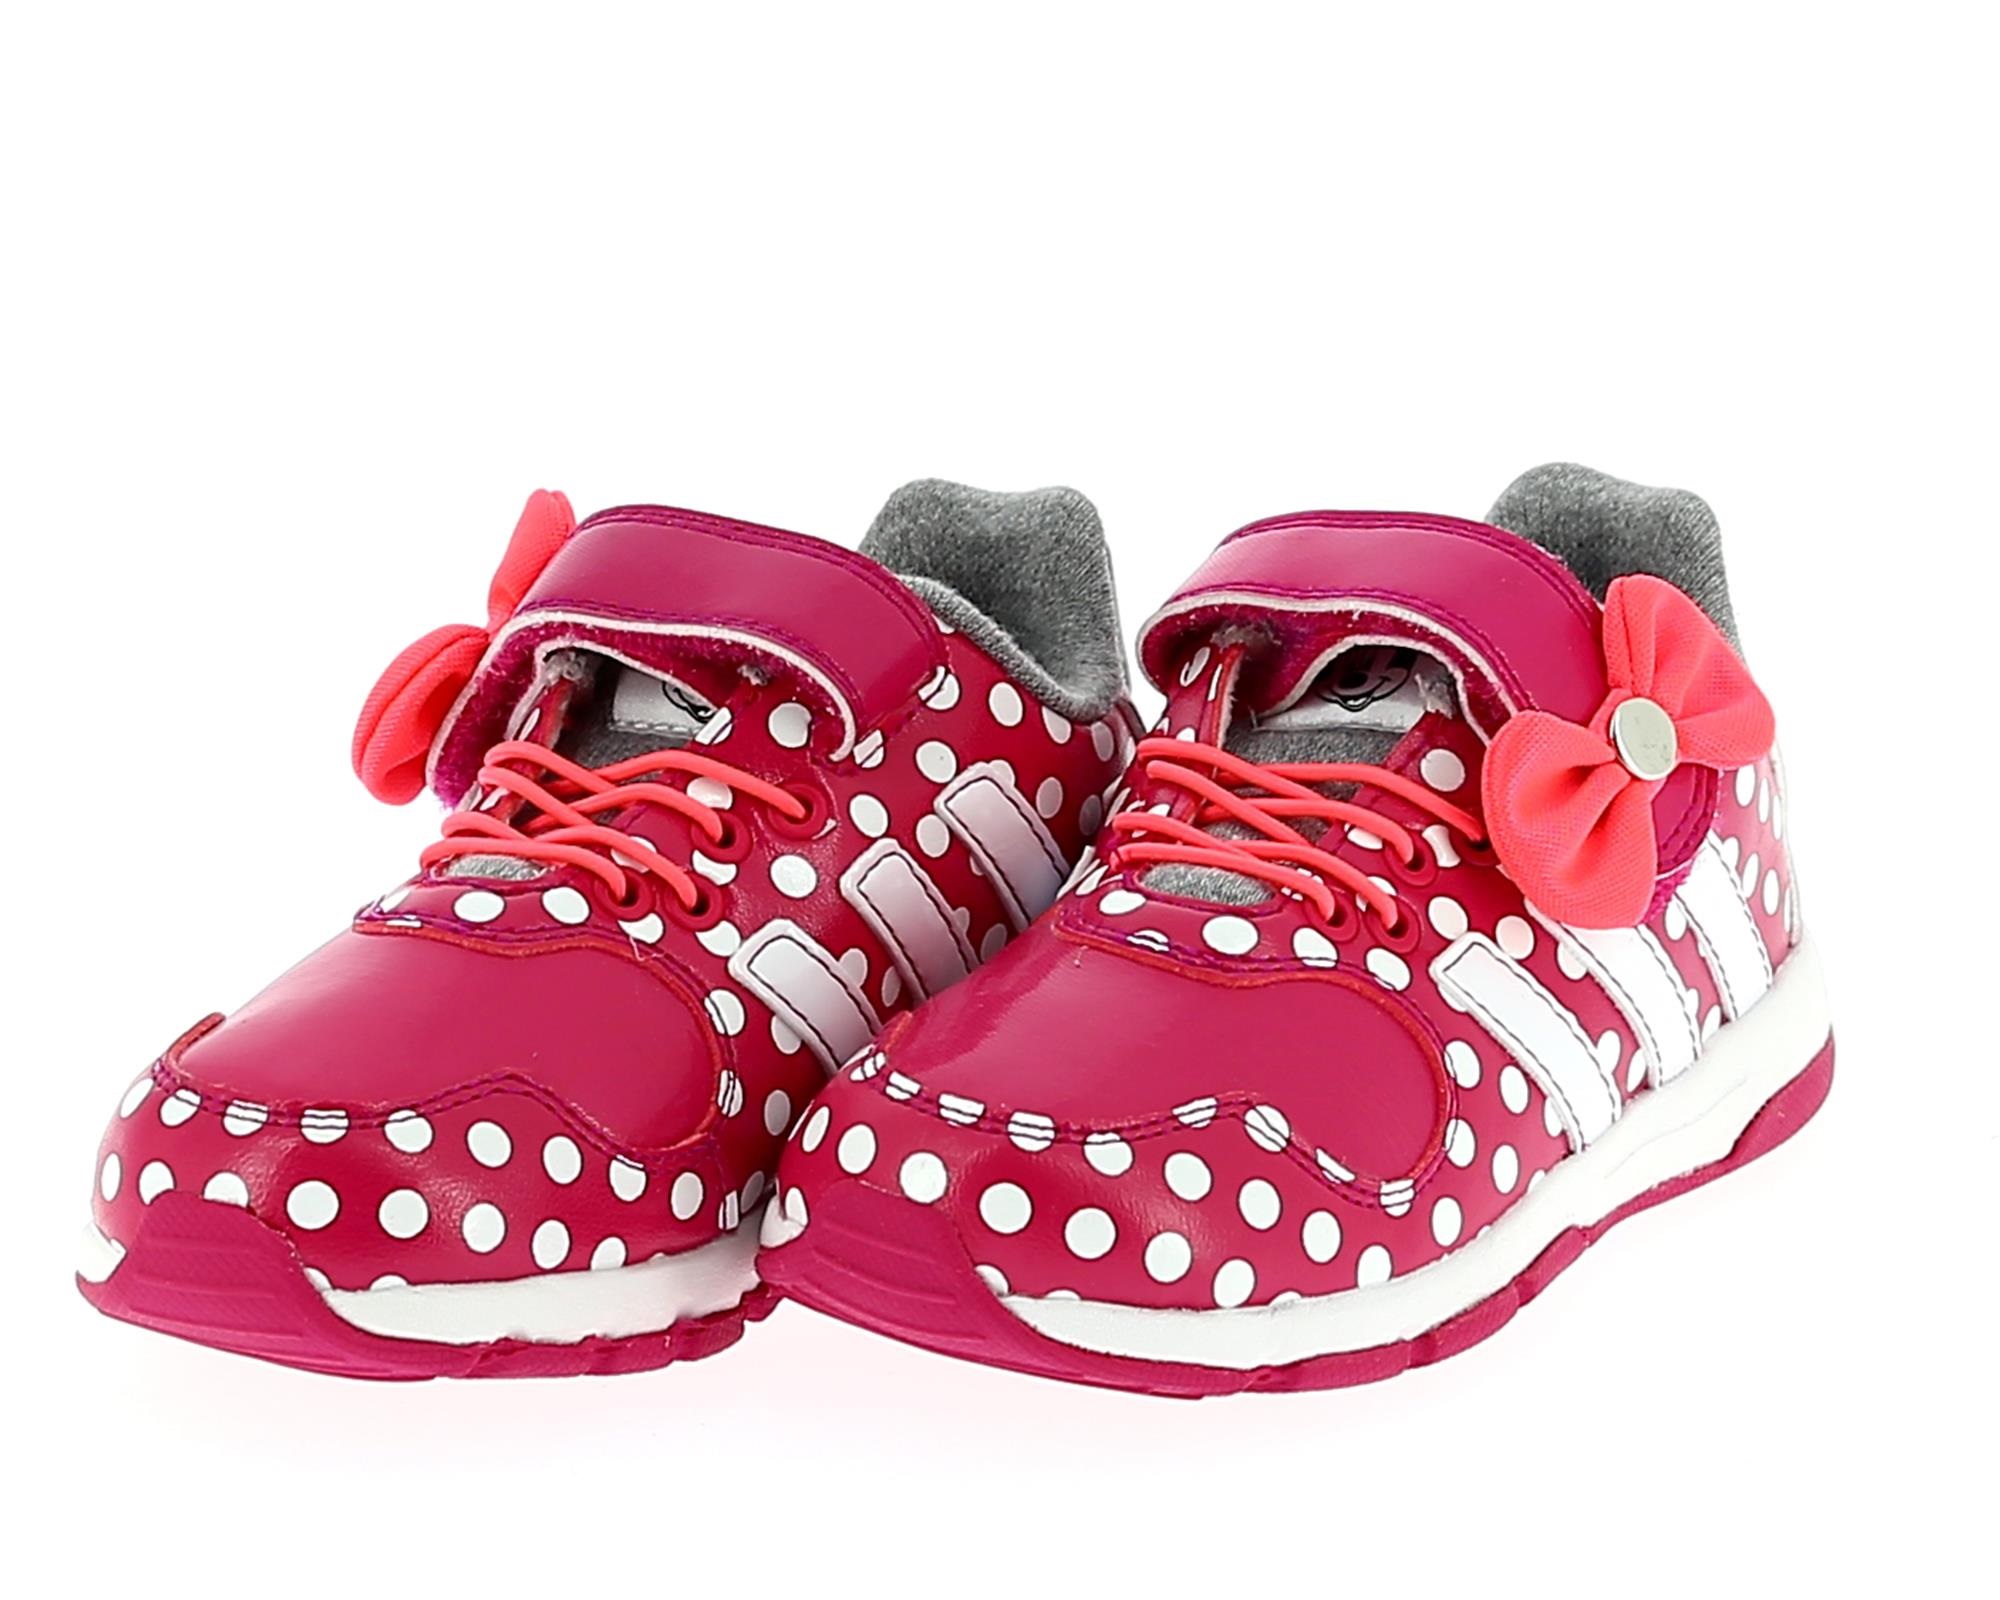 Adidas Zapatillas Disney Minnie Mouse CF Infantil (rosa/blanco)